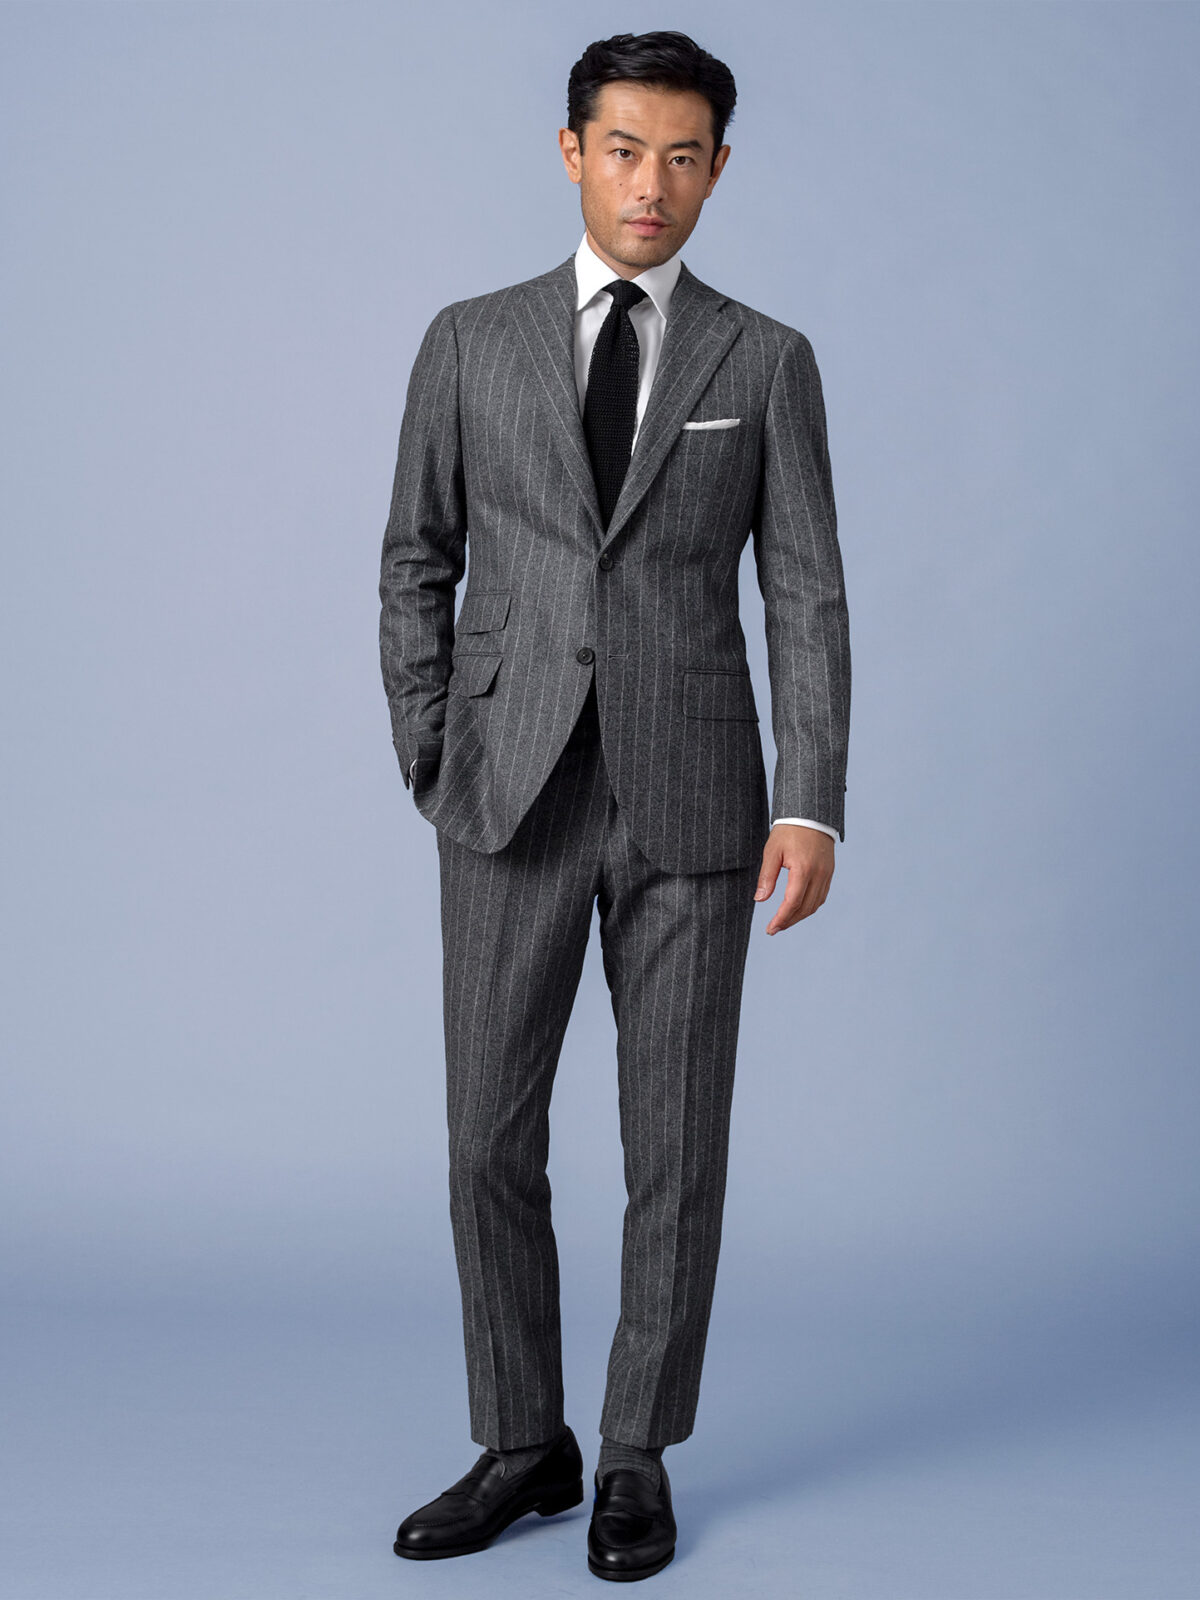 Buy Men Pin Stripe Suit / Grey 2 Piece Strip Suit / Bespoke Business Suit /  Slim Fit Office Suit Online in India - Etsy